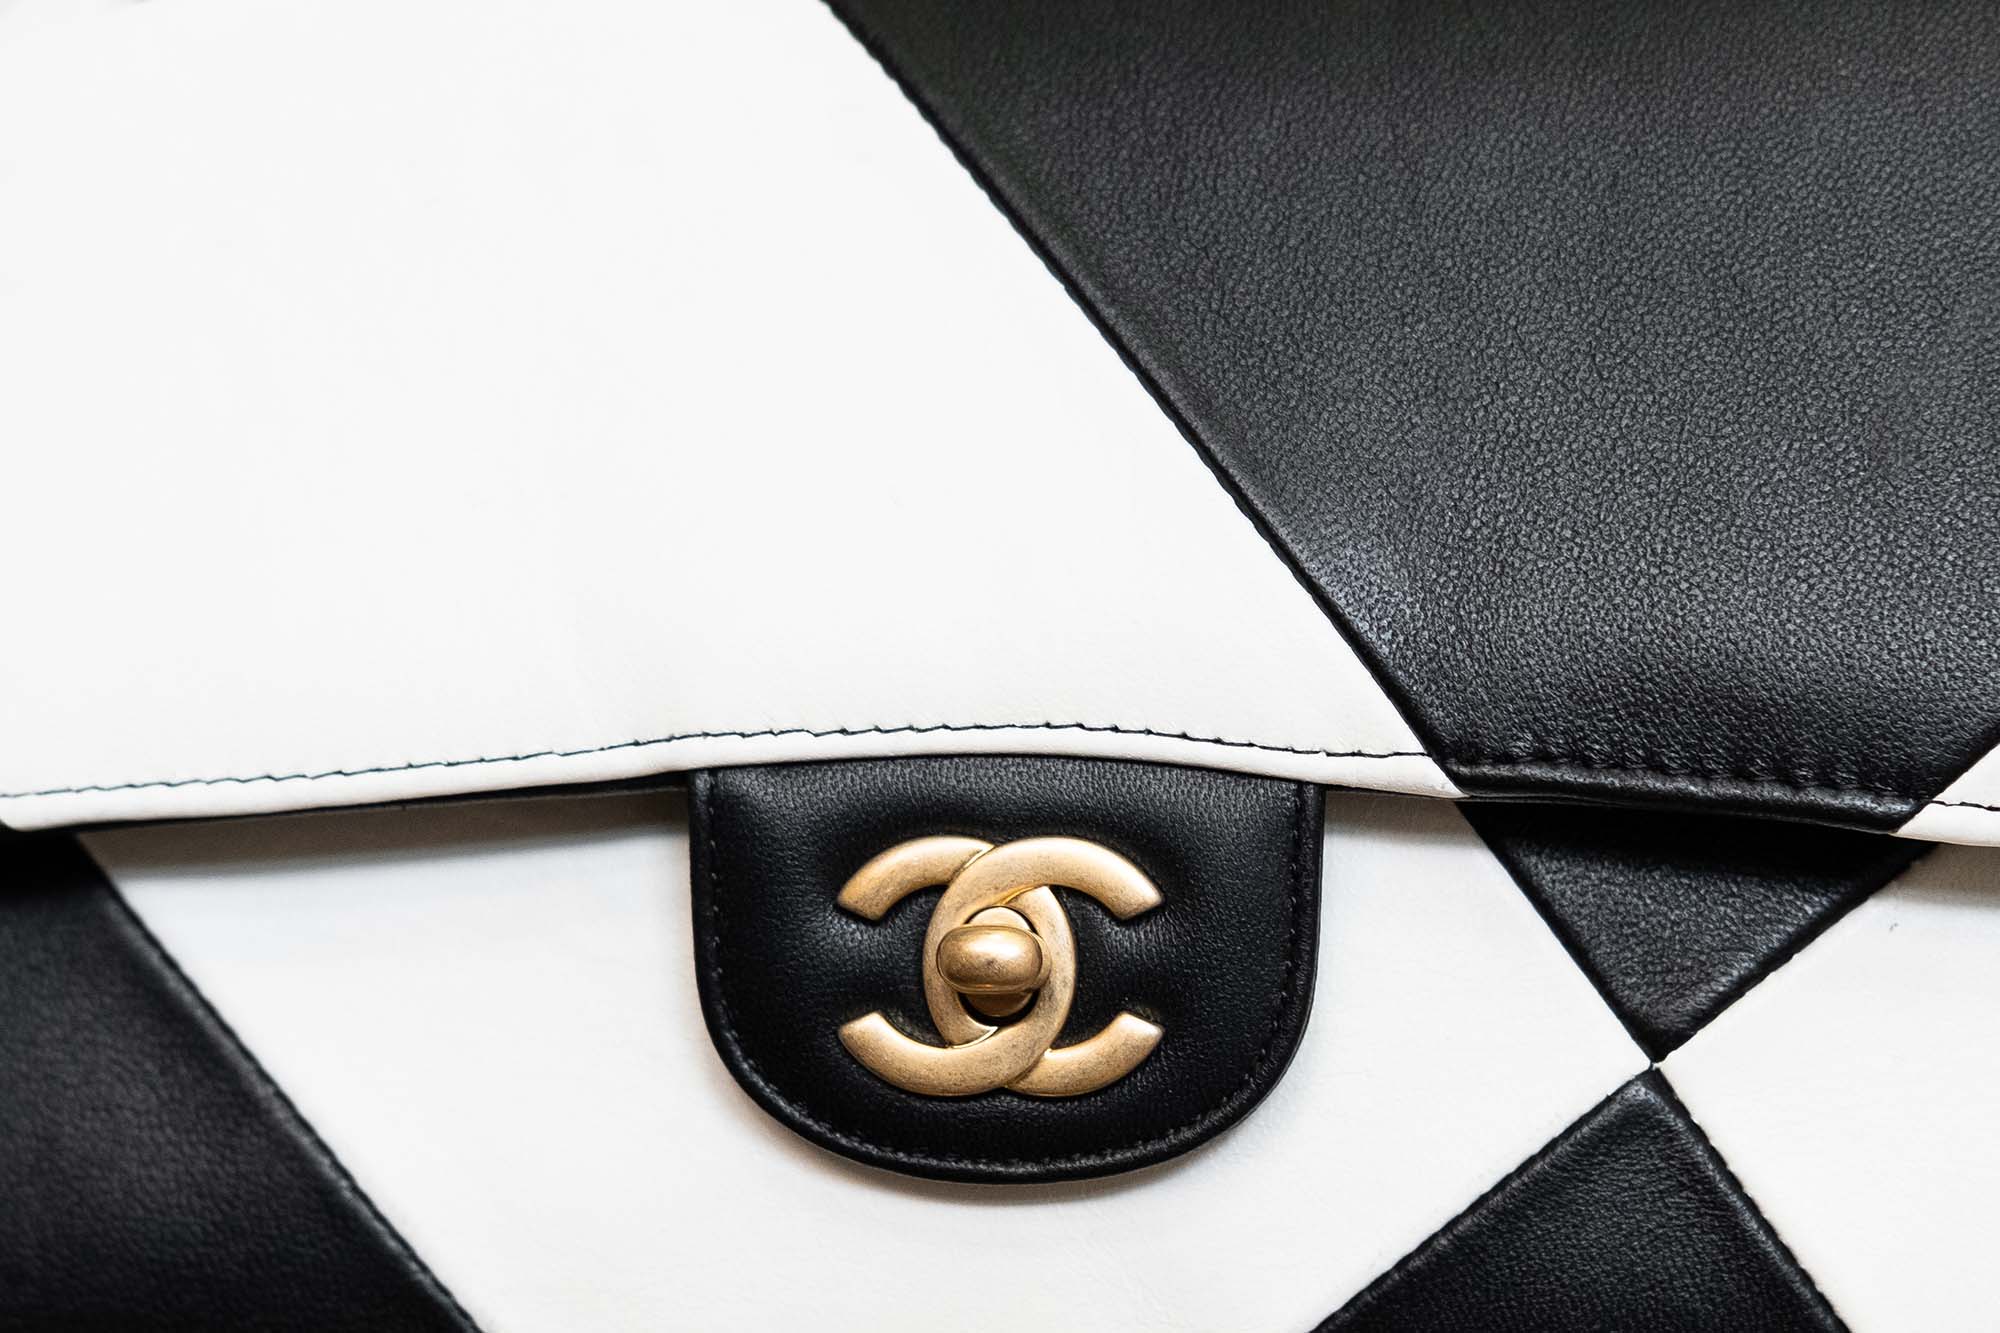 chanel black and white handbag purse